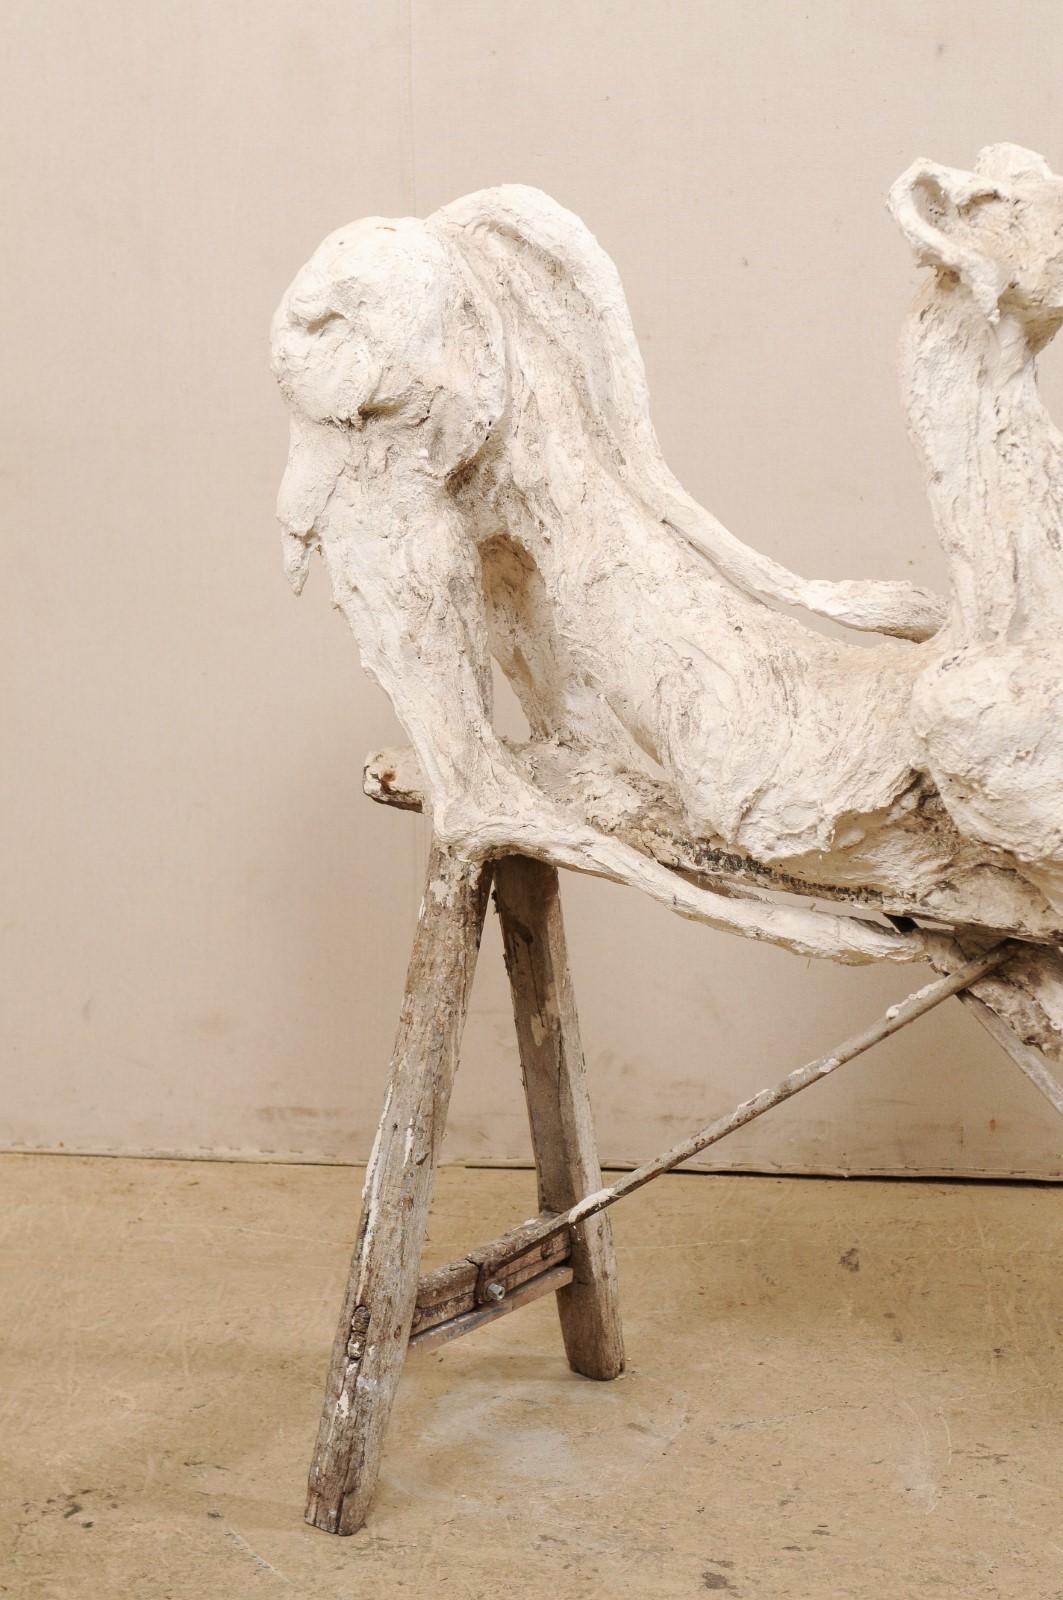 Contemporary Large French Greyhound Sculpture Poised on Sawhorse Leg Base